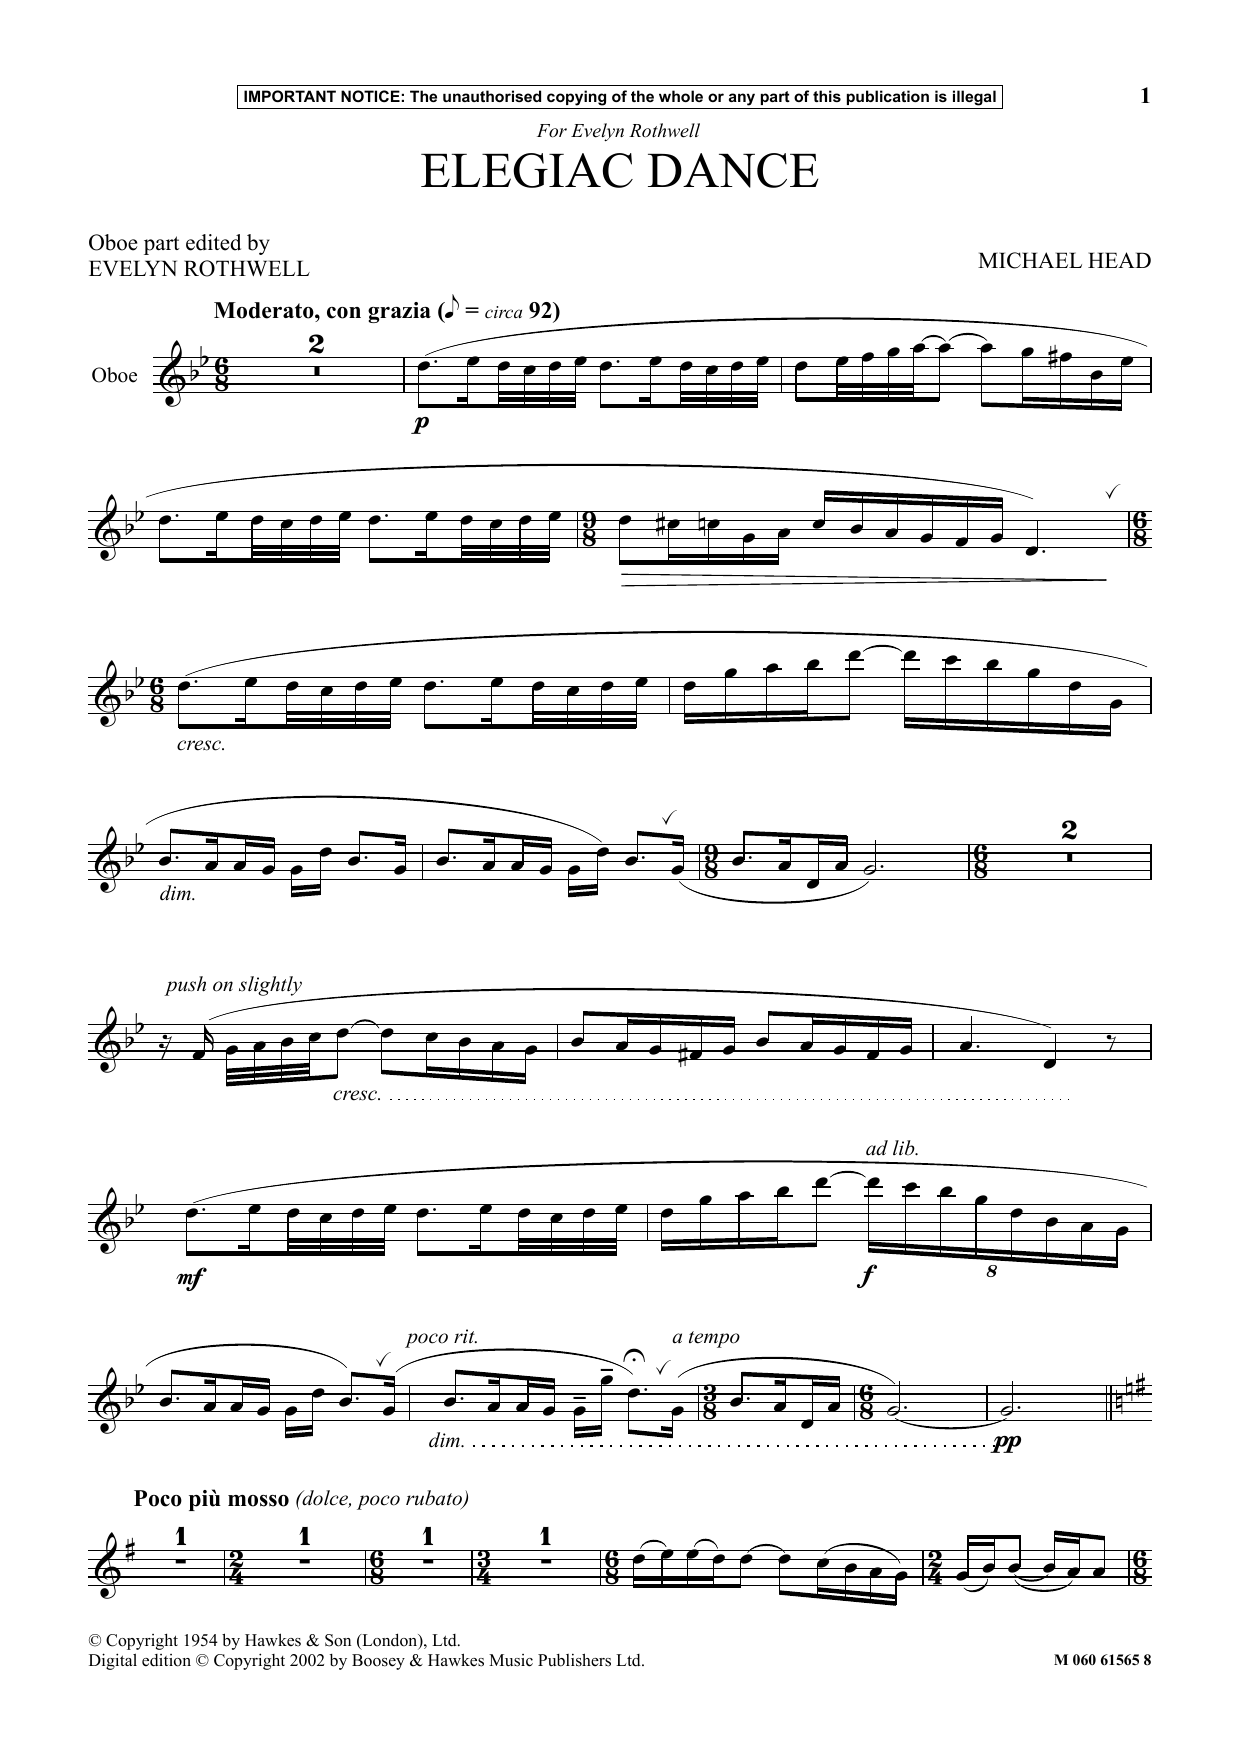 Michael Head Elegiac Dance Sheet Music Notes & Chords for Instrumental Solo - Download or Print PDF